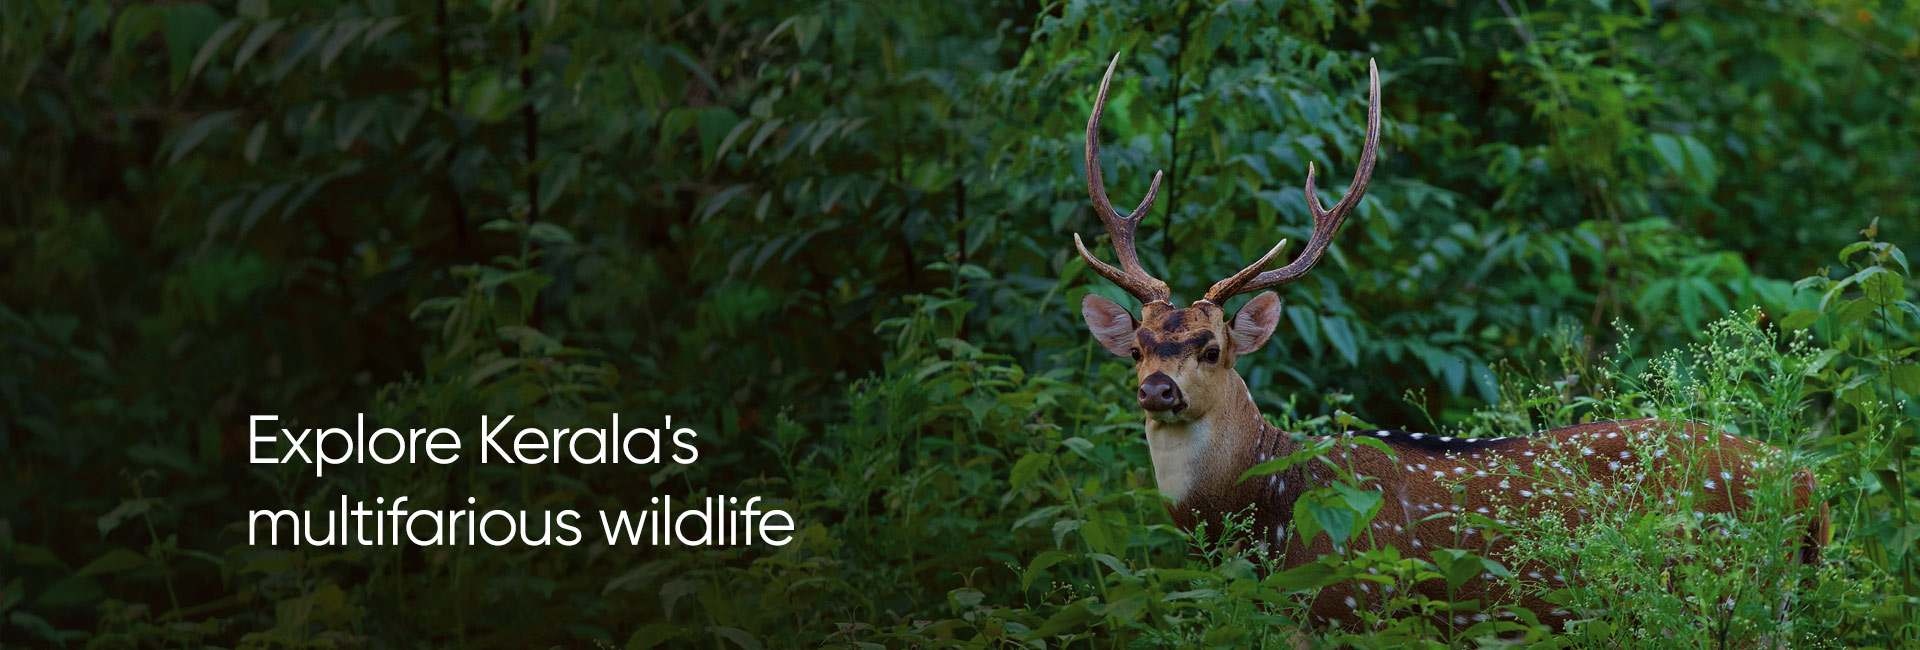 Explore Kerala's multifarious wildlife